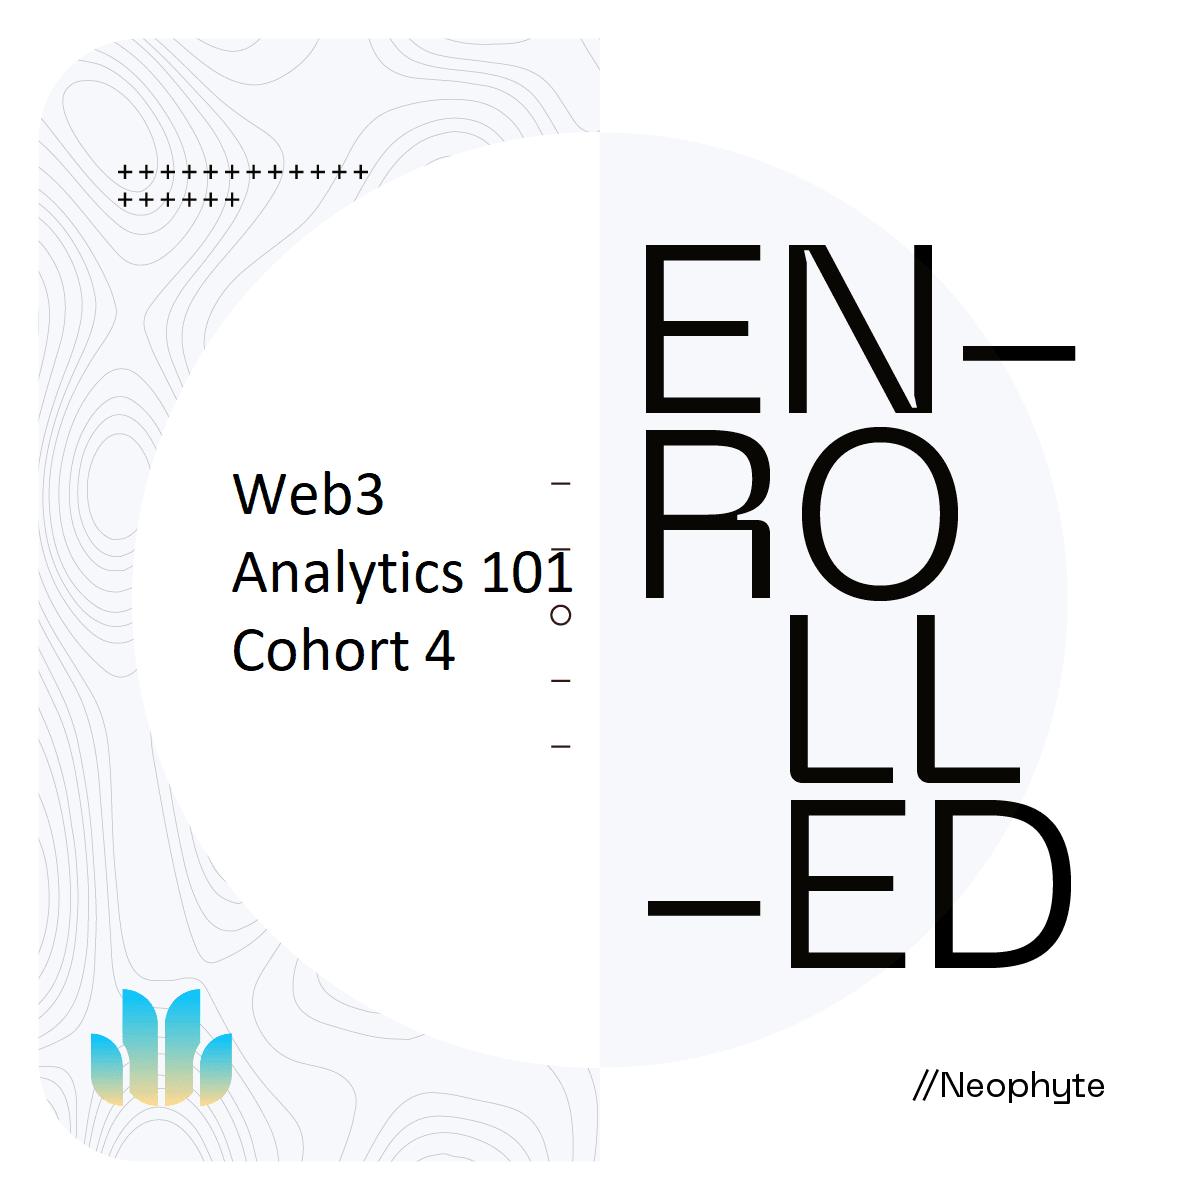 Web3 Analytics 101 Live Course Cohort 4 Enrolled Students